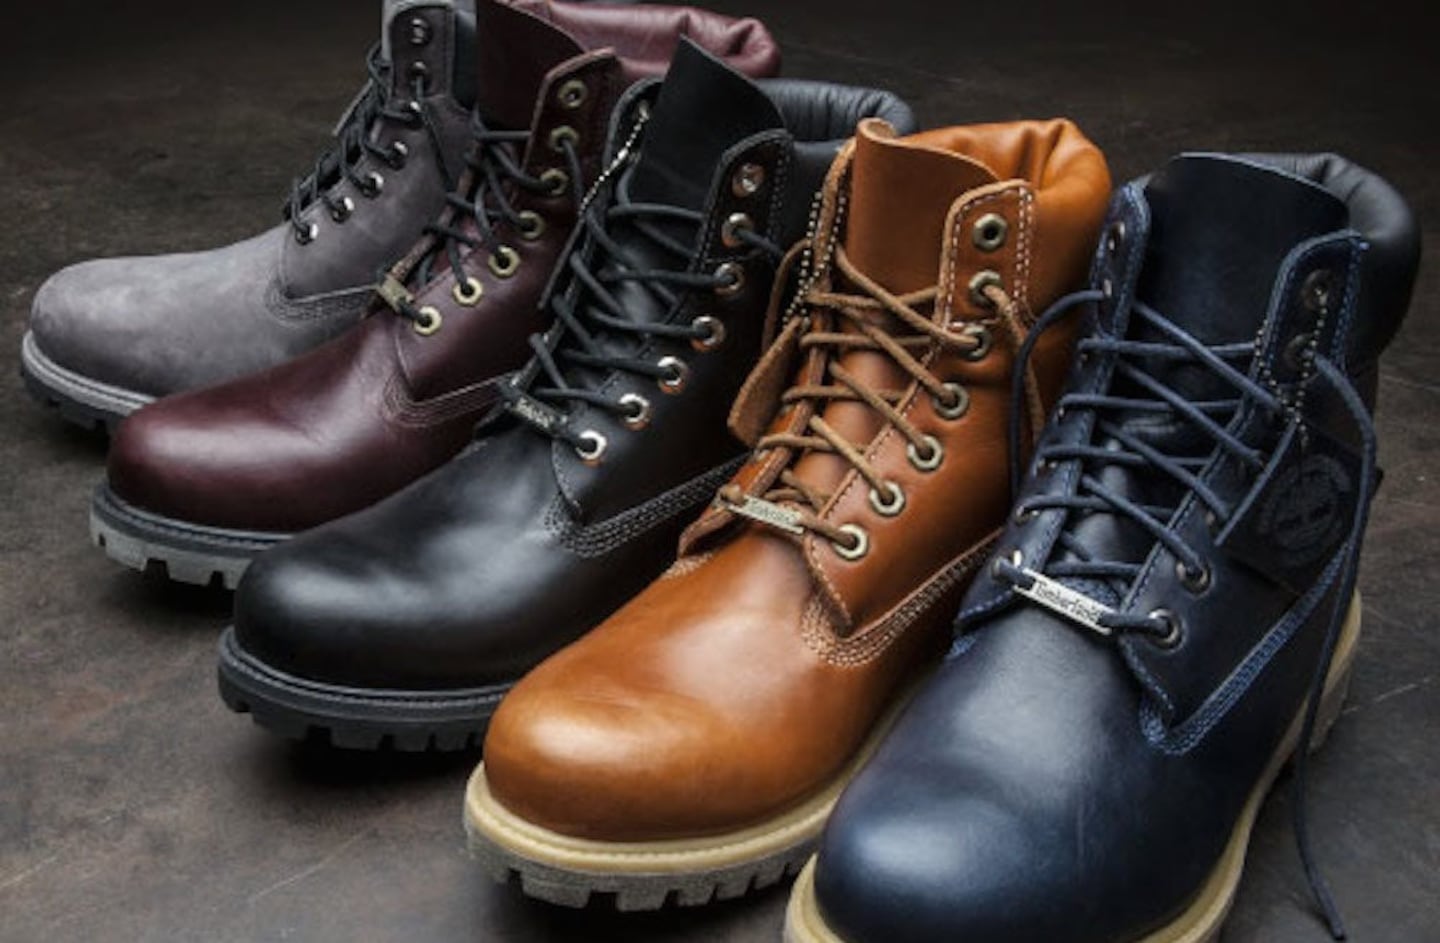 Timberland boots.